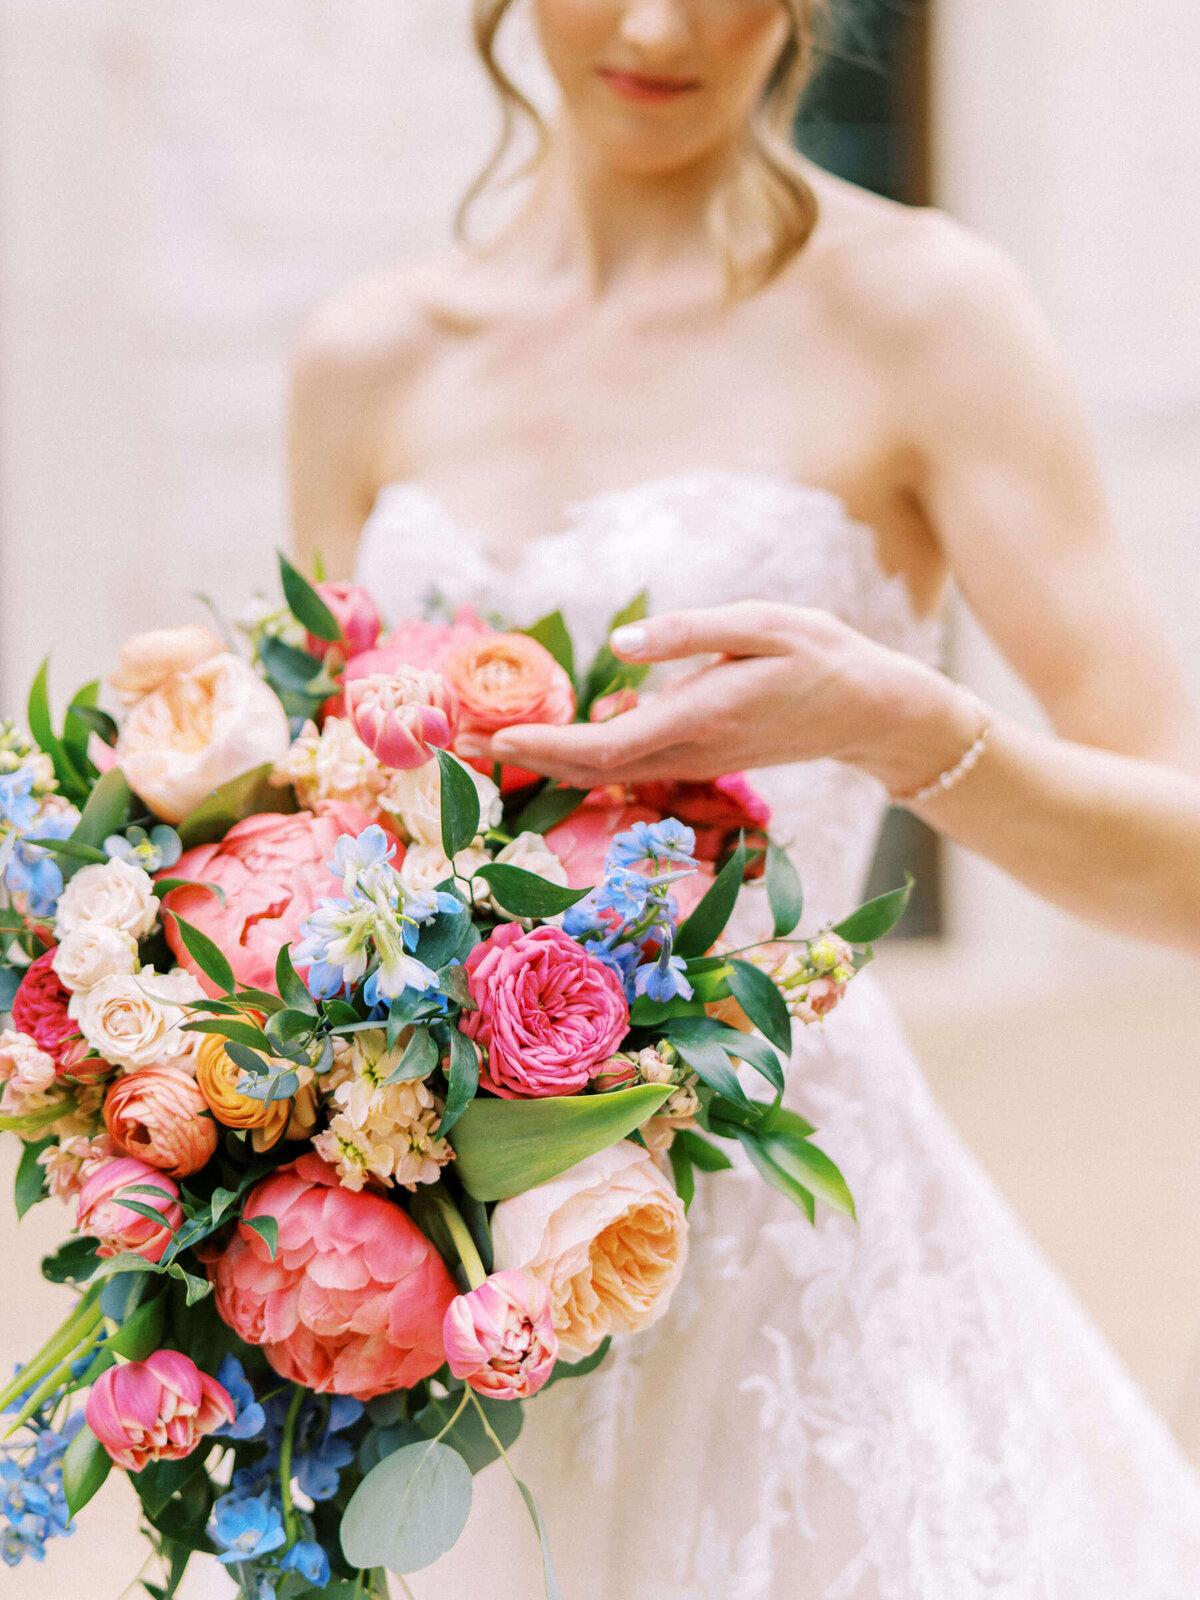 Bride wearing Monique Lhuillier gown stops to admire her colorful bridal bouquet